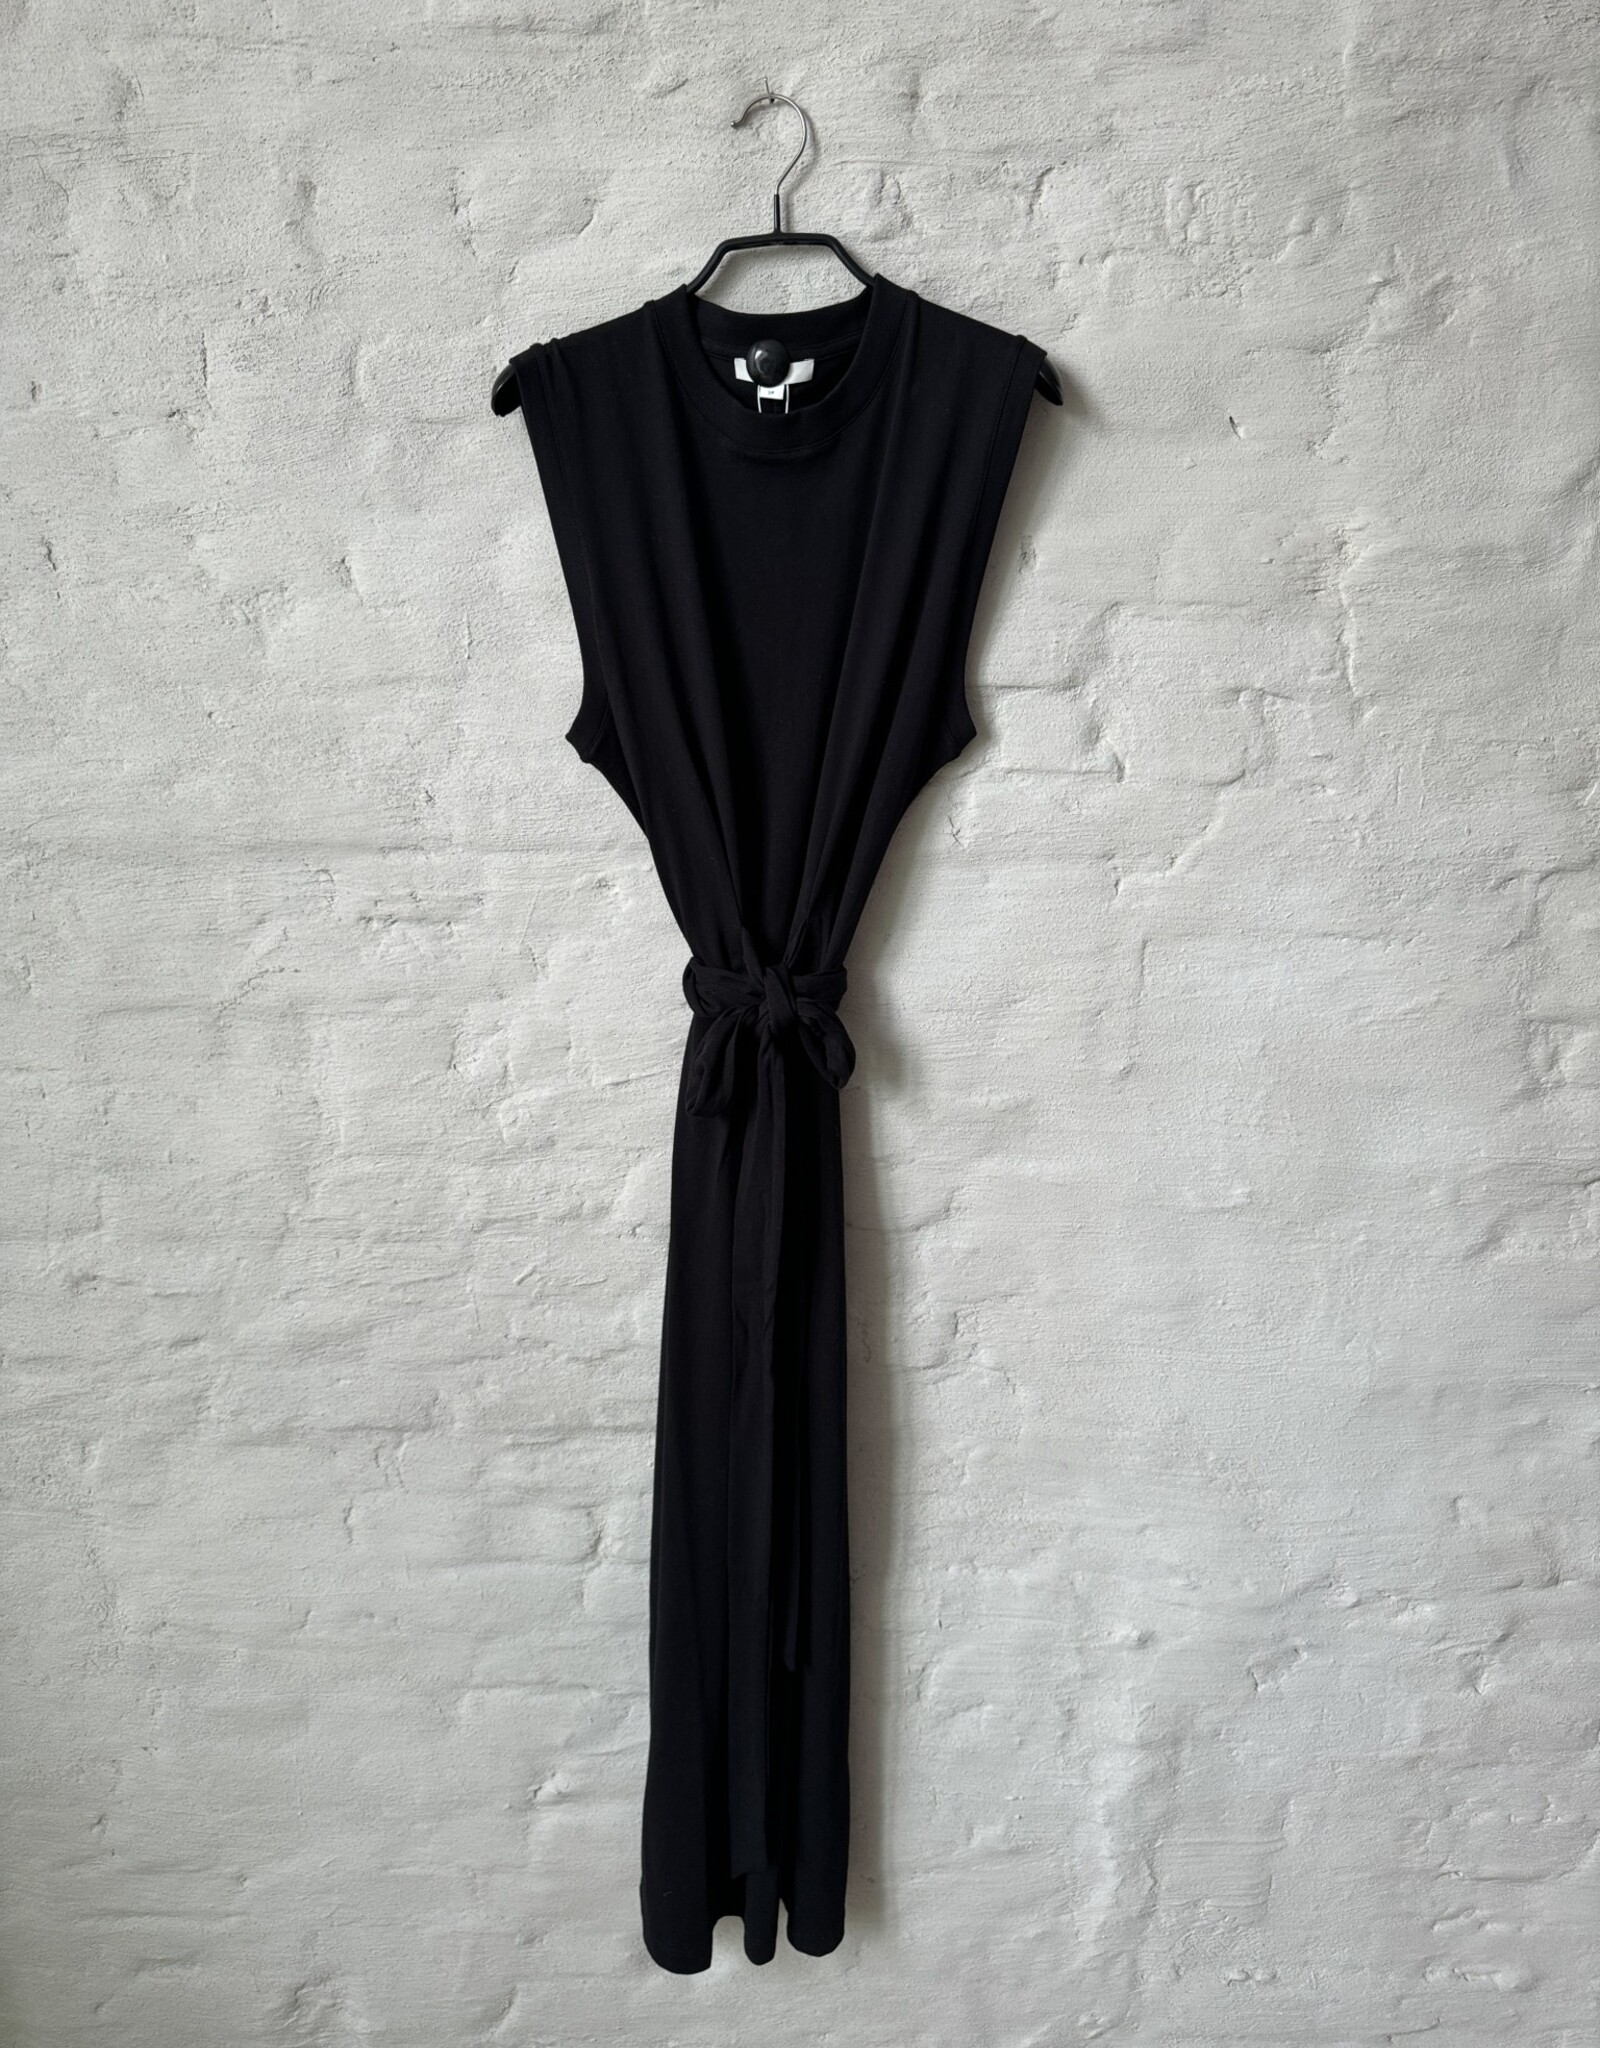 VINCE Sleeveless Wrap Dress Black